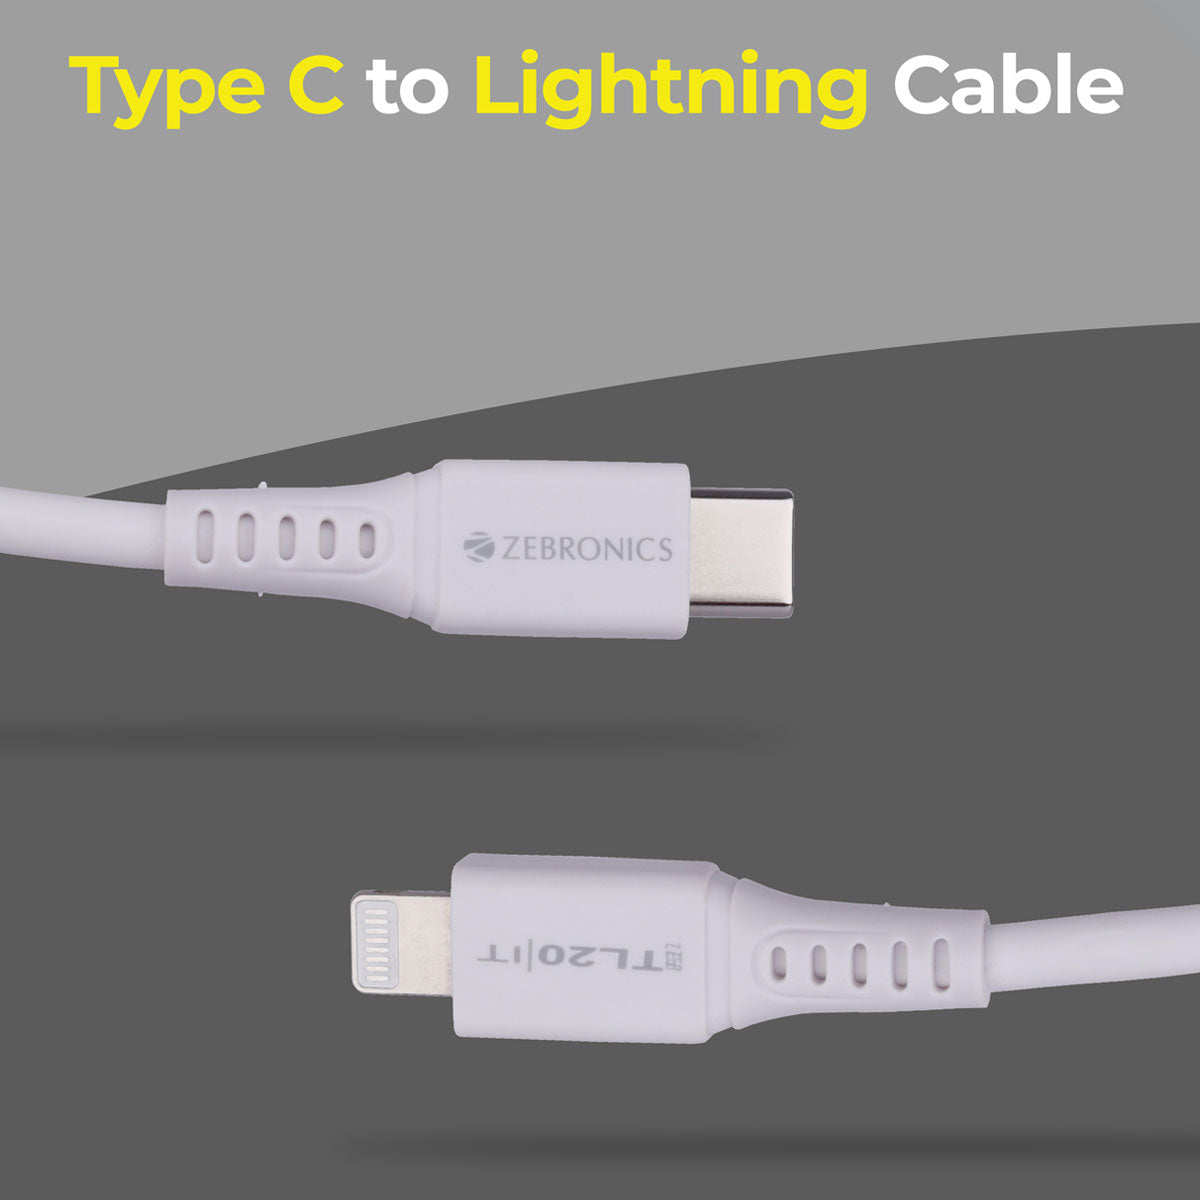 Zeb-TL20 - Lightning Cable - Zebronics